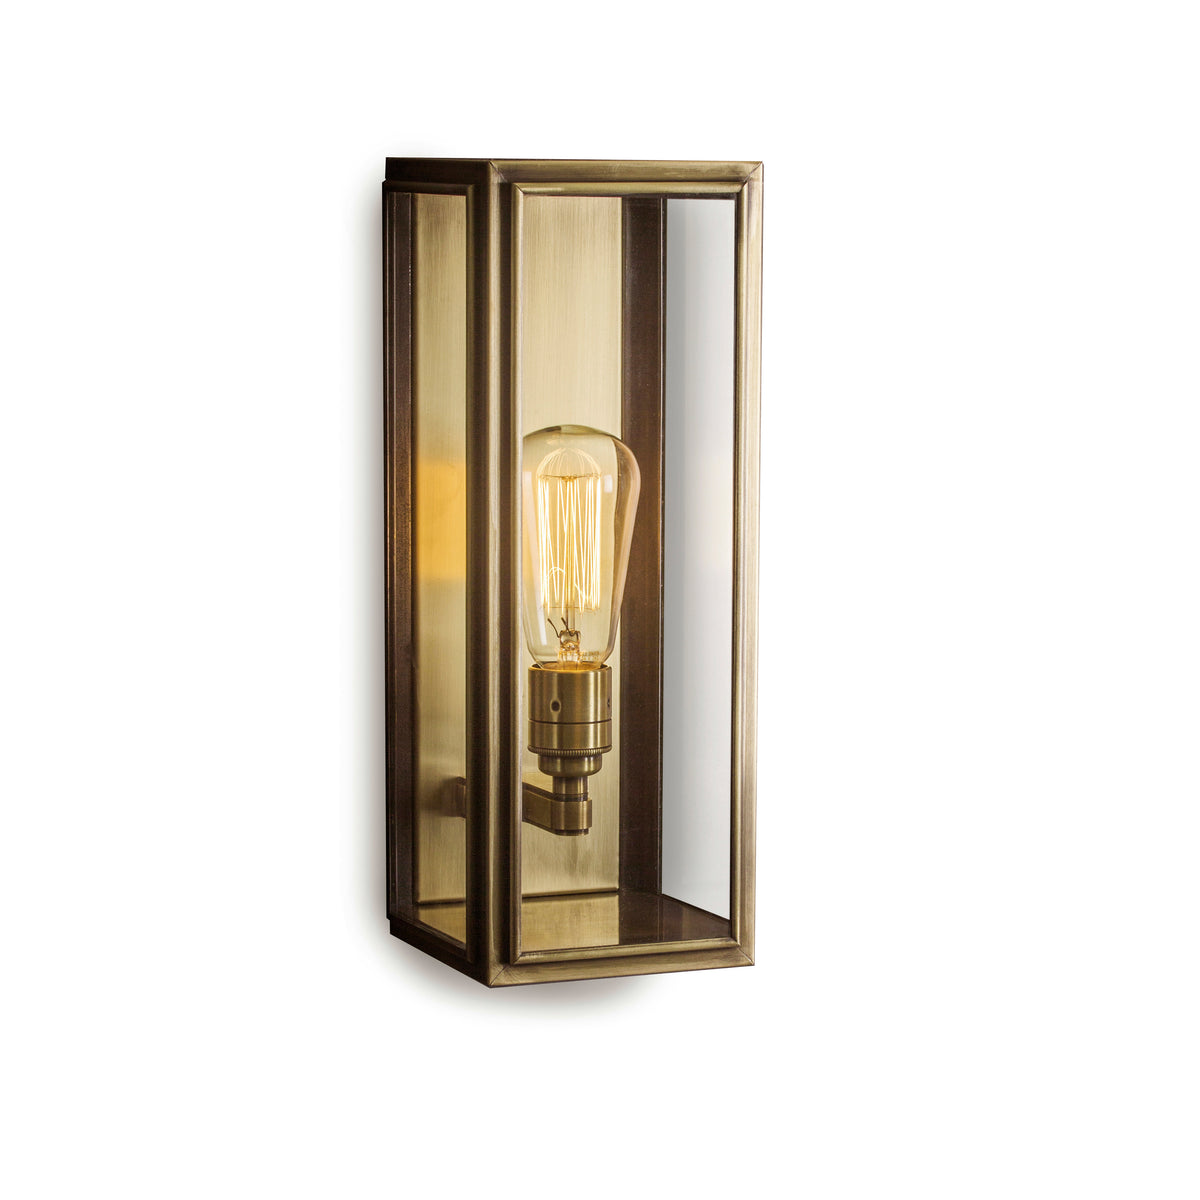 J Adams Ash Medium Wall Lantern box light in antique brass with clear glass